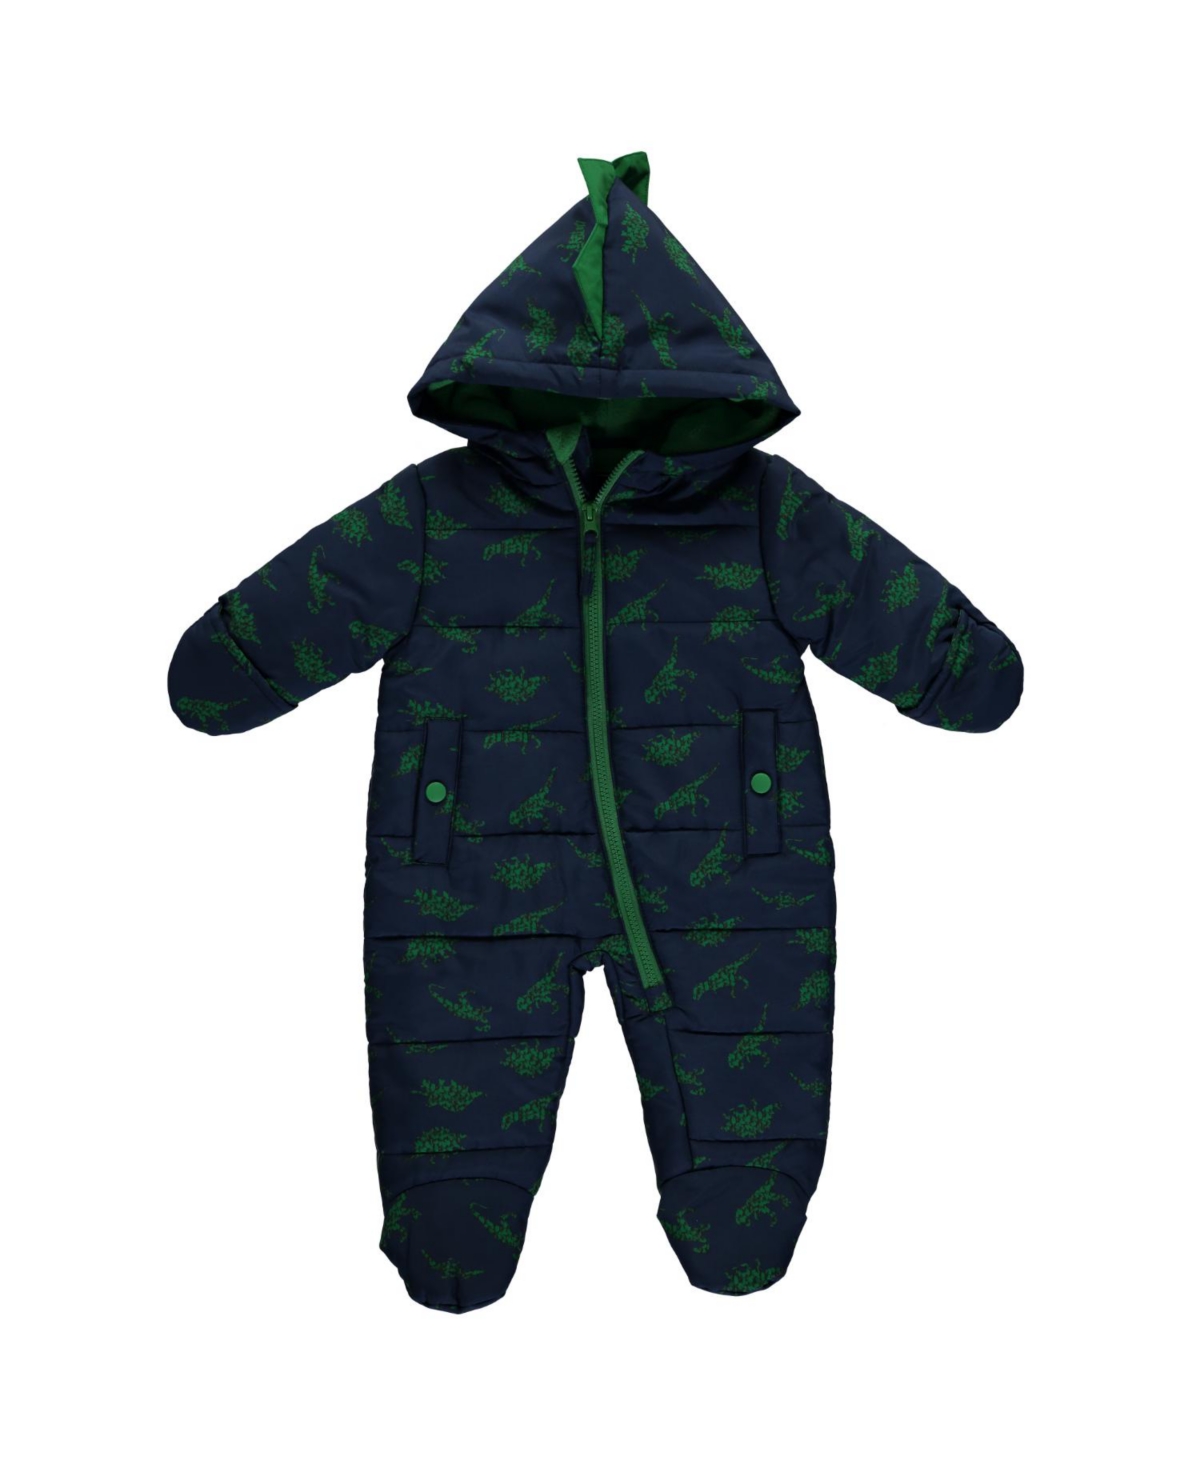 S Rothschild & Co Rothschild Baby Boys Dinosaur Print Hooded Pram Snowsuit In Navy,green